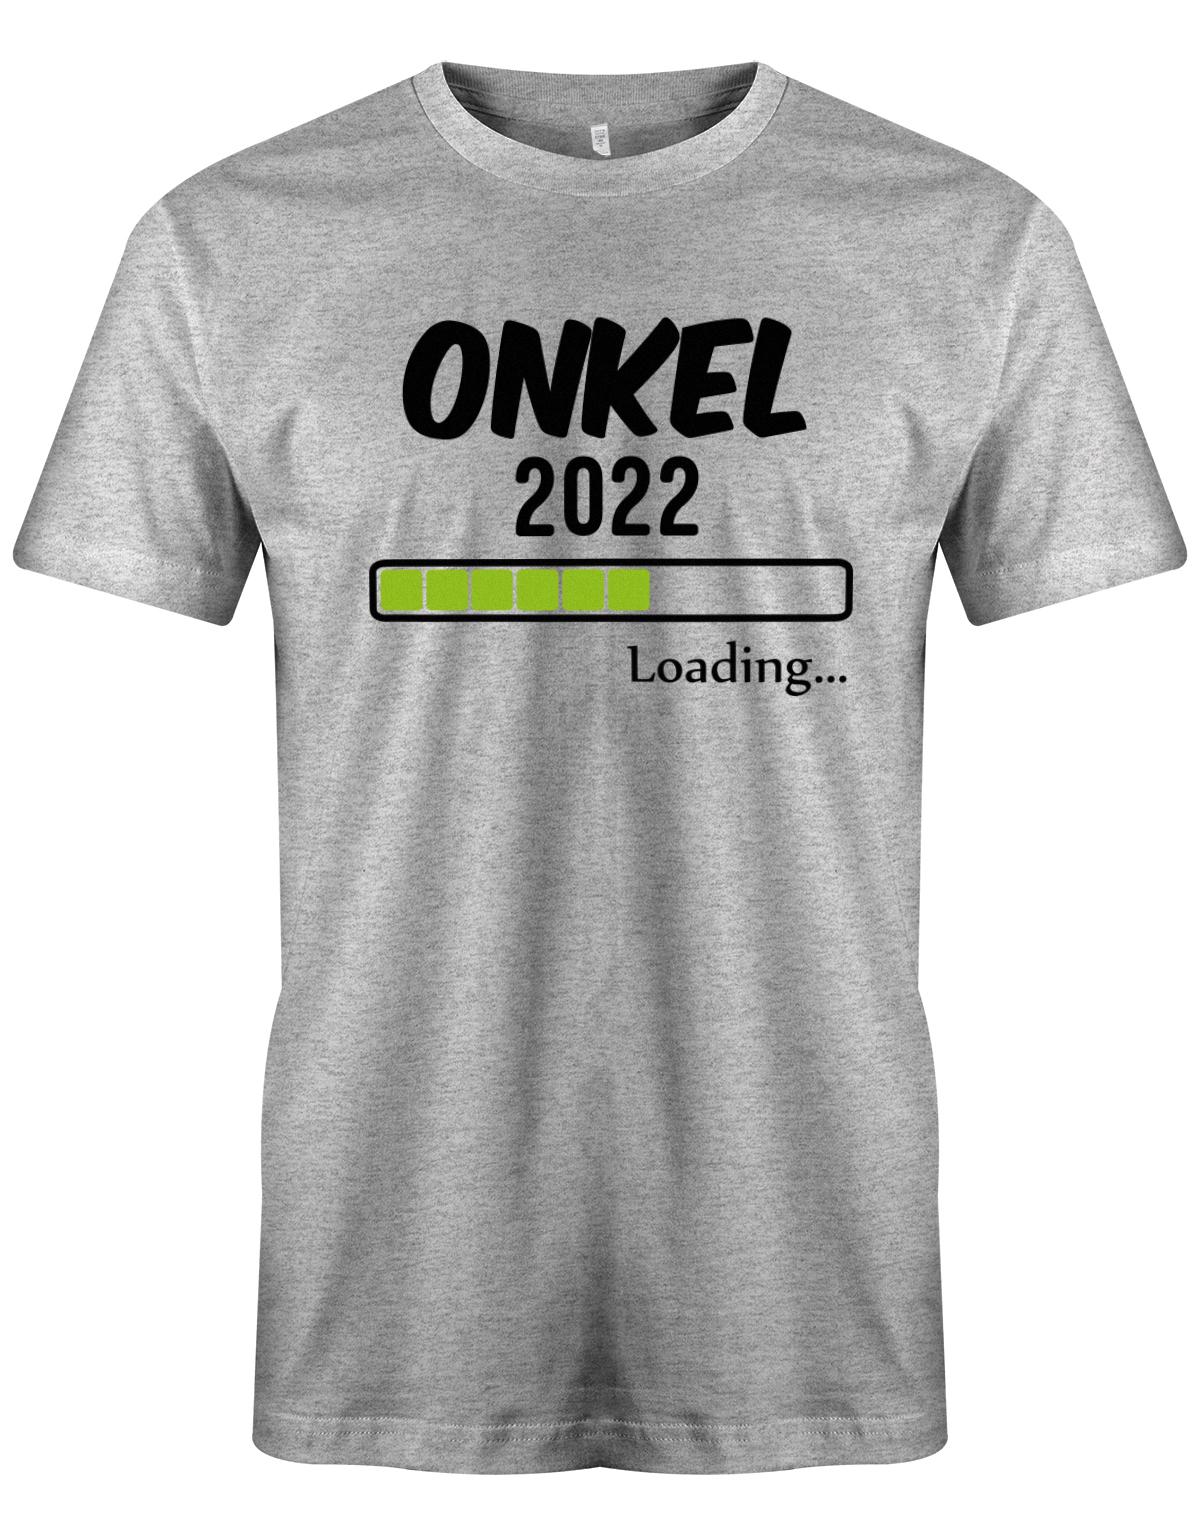 Onkel-loading-2022-Herren-Shirt-Grau